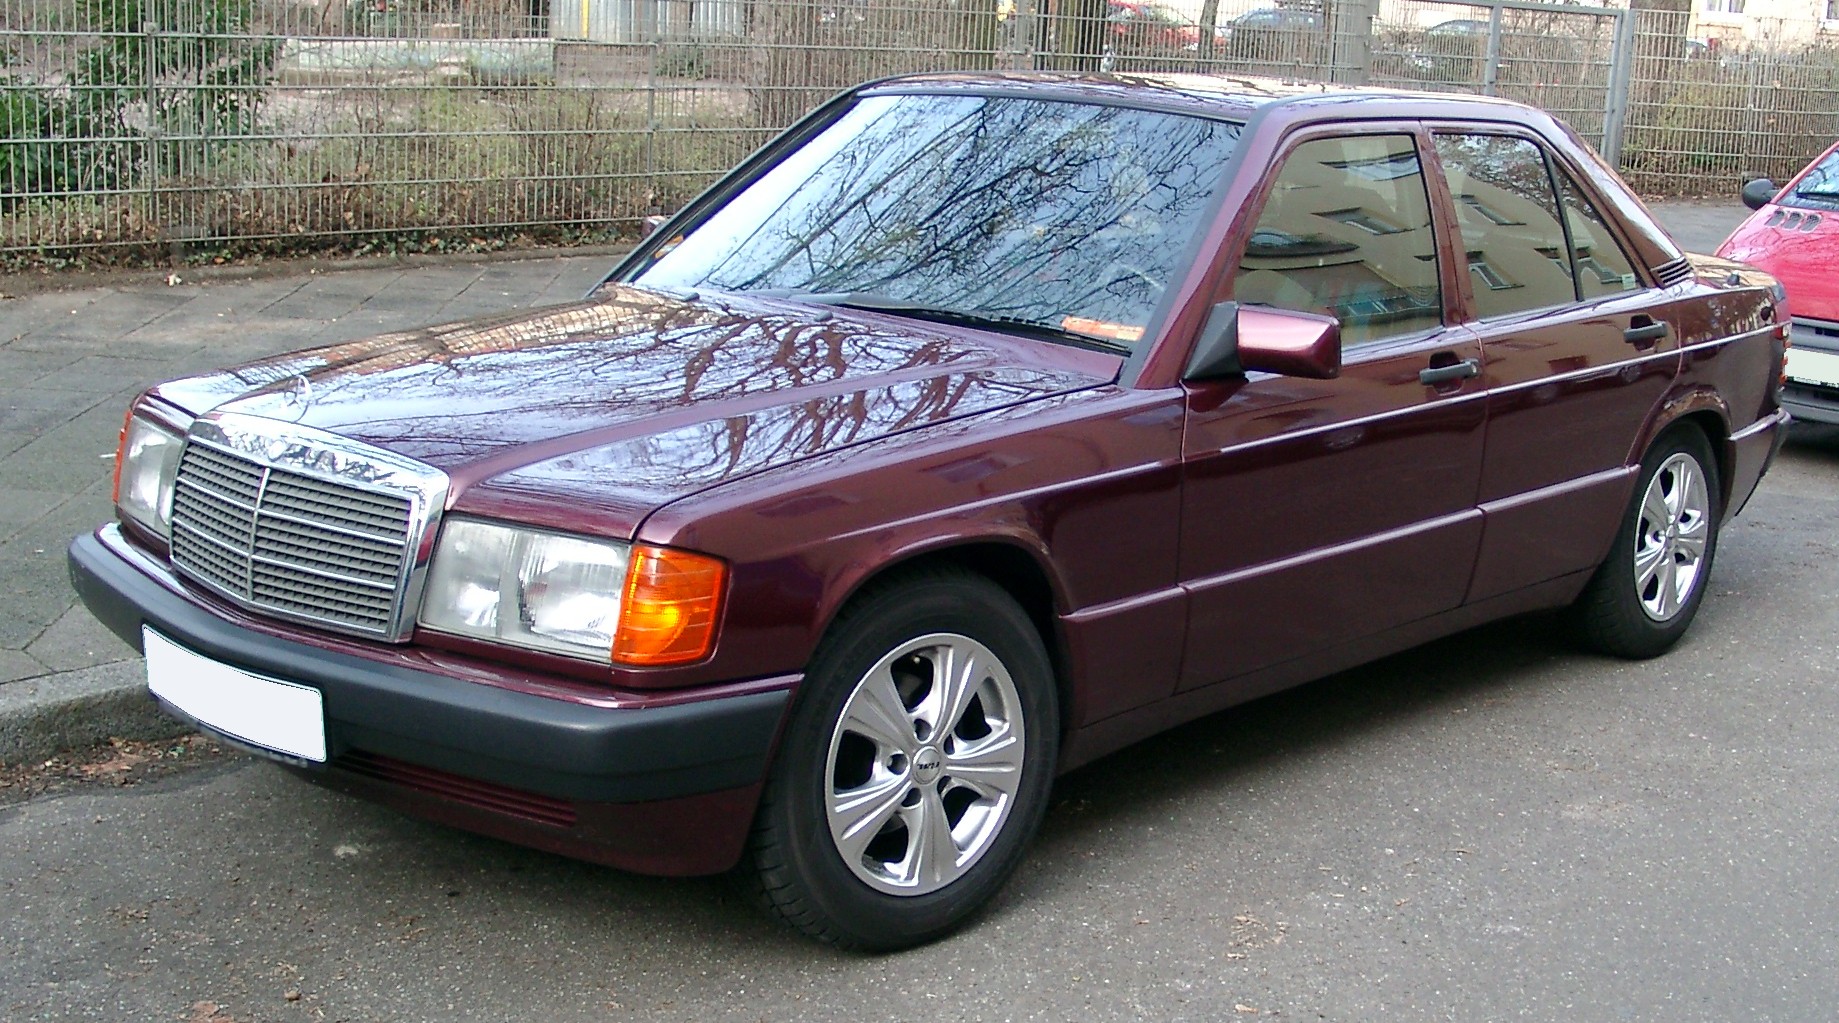 File:Mercedes W201 front 20080108.jpg - Wikimedia Commons